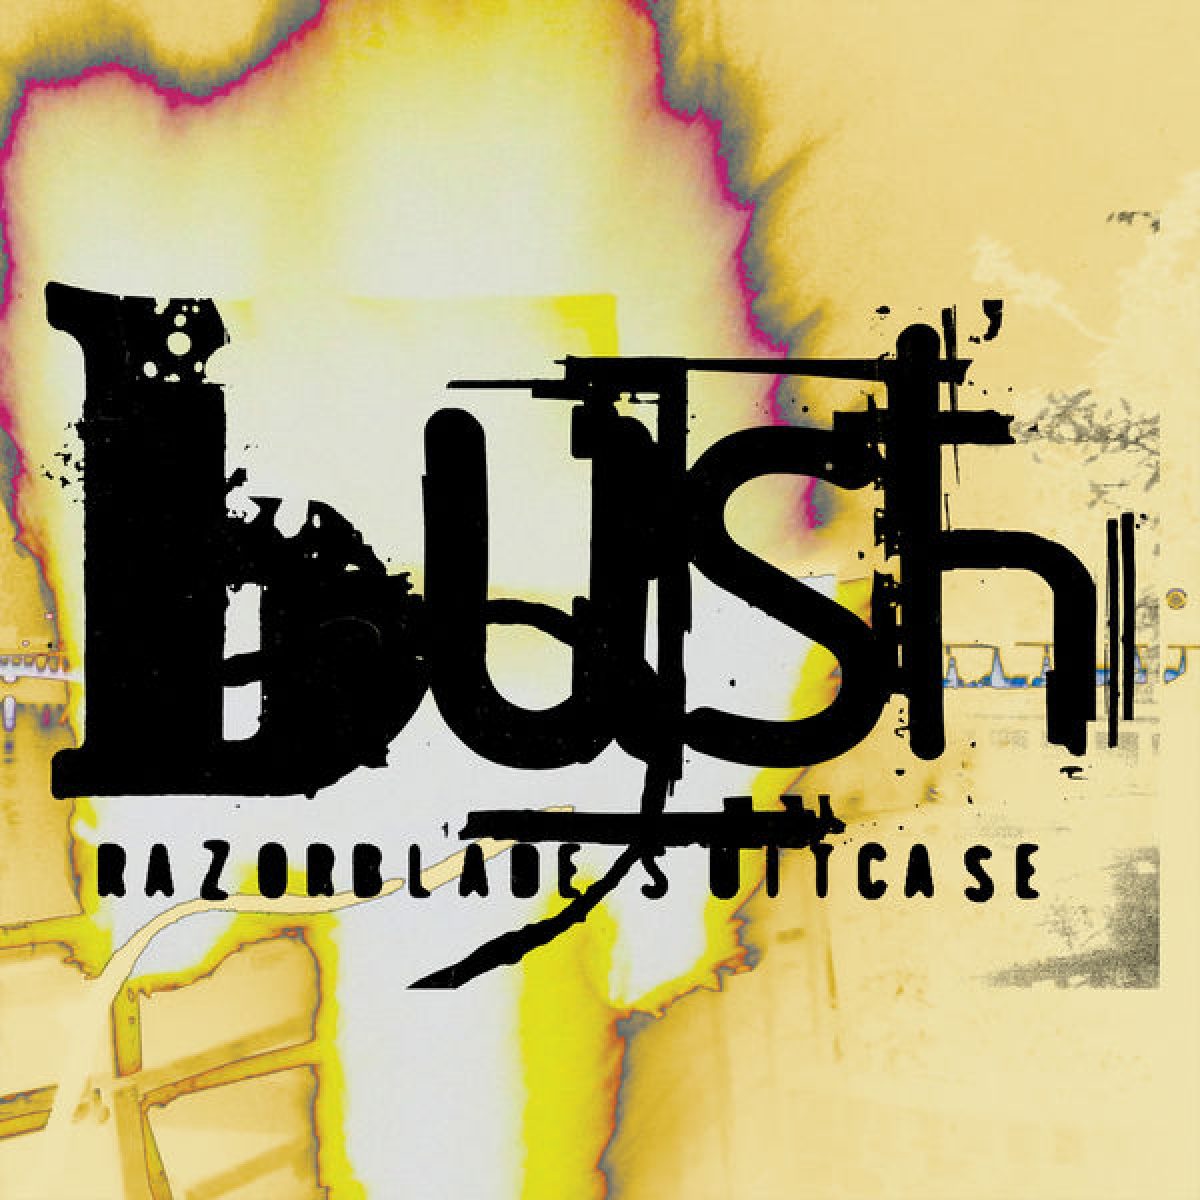 Bush, Razorblade Suitcase in Addition